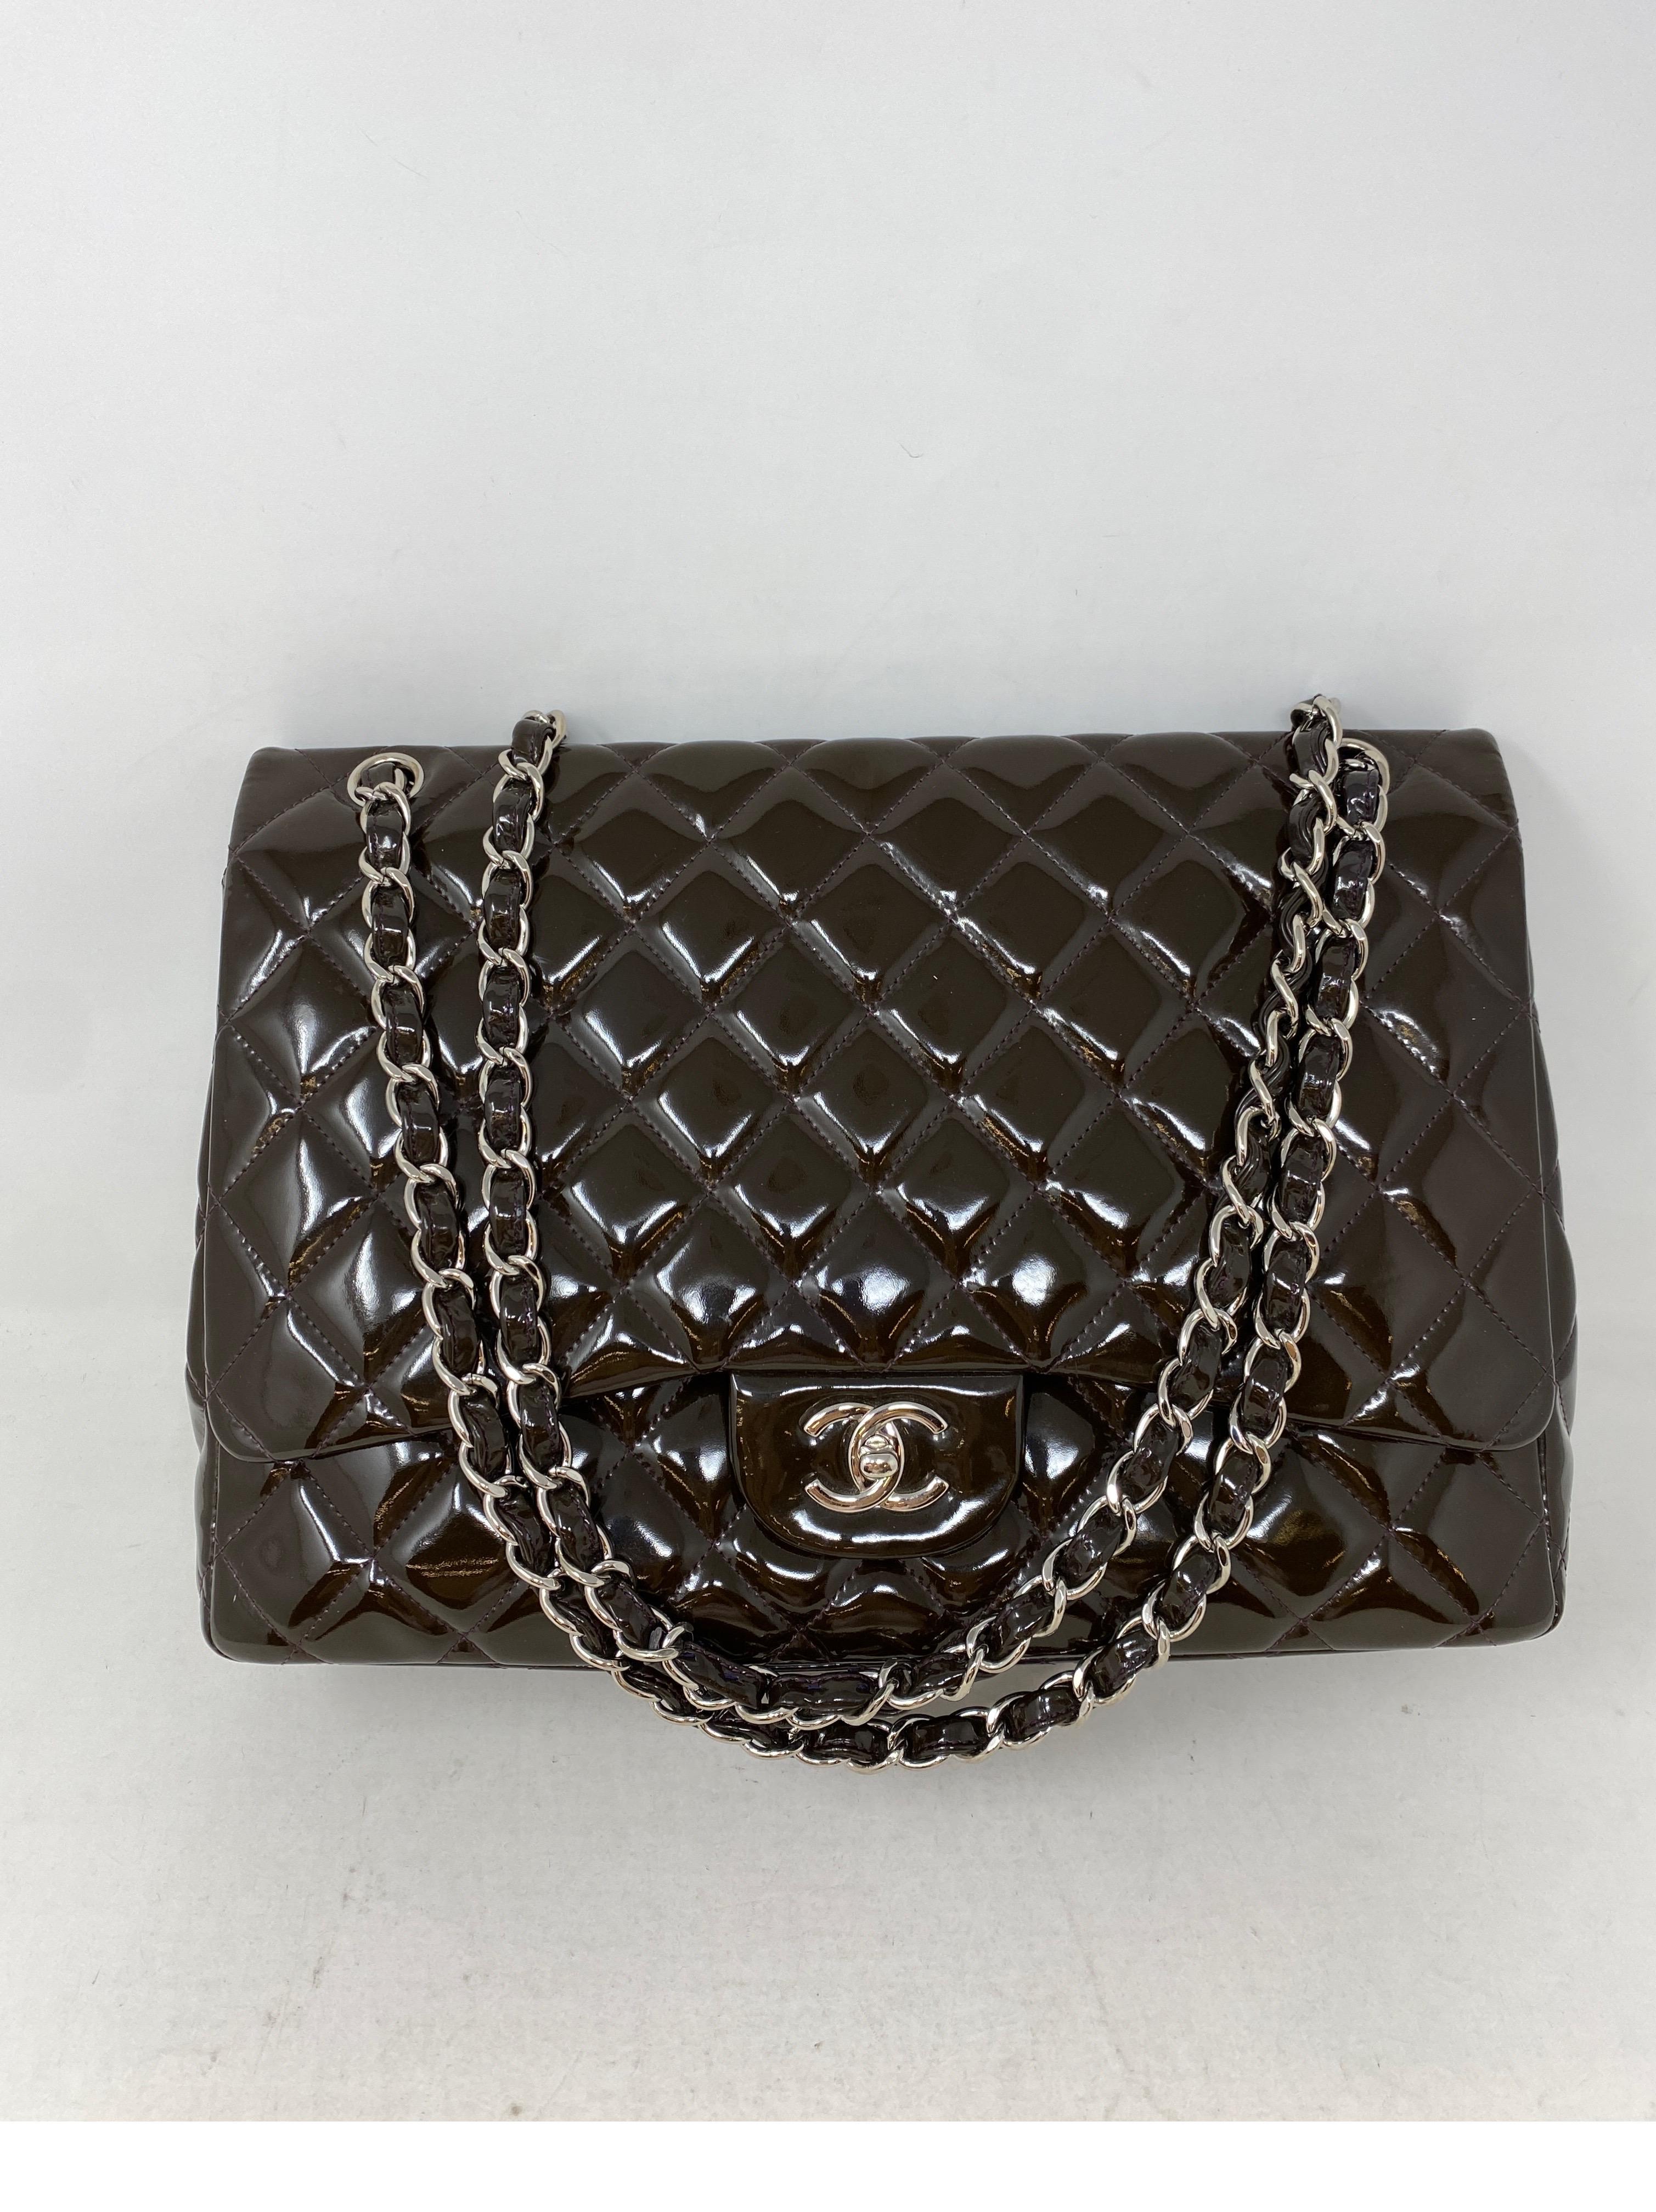 Chanel Jumbo Patent Leather Brown Bag  9